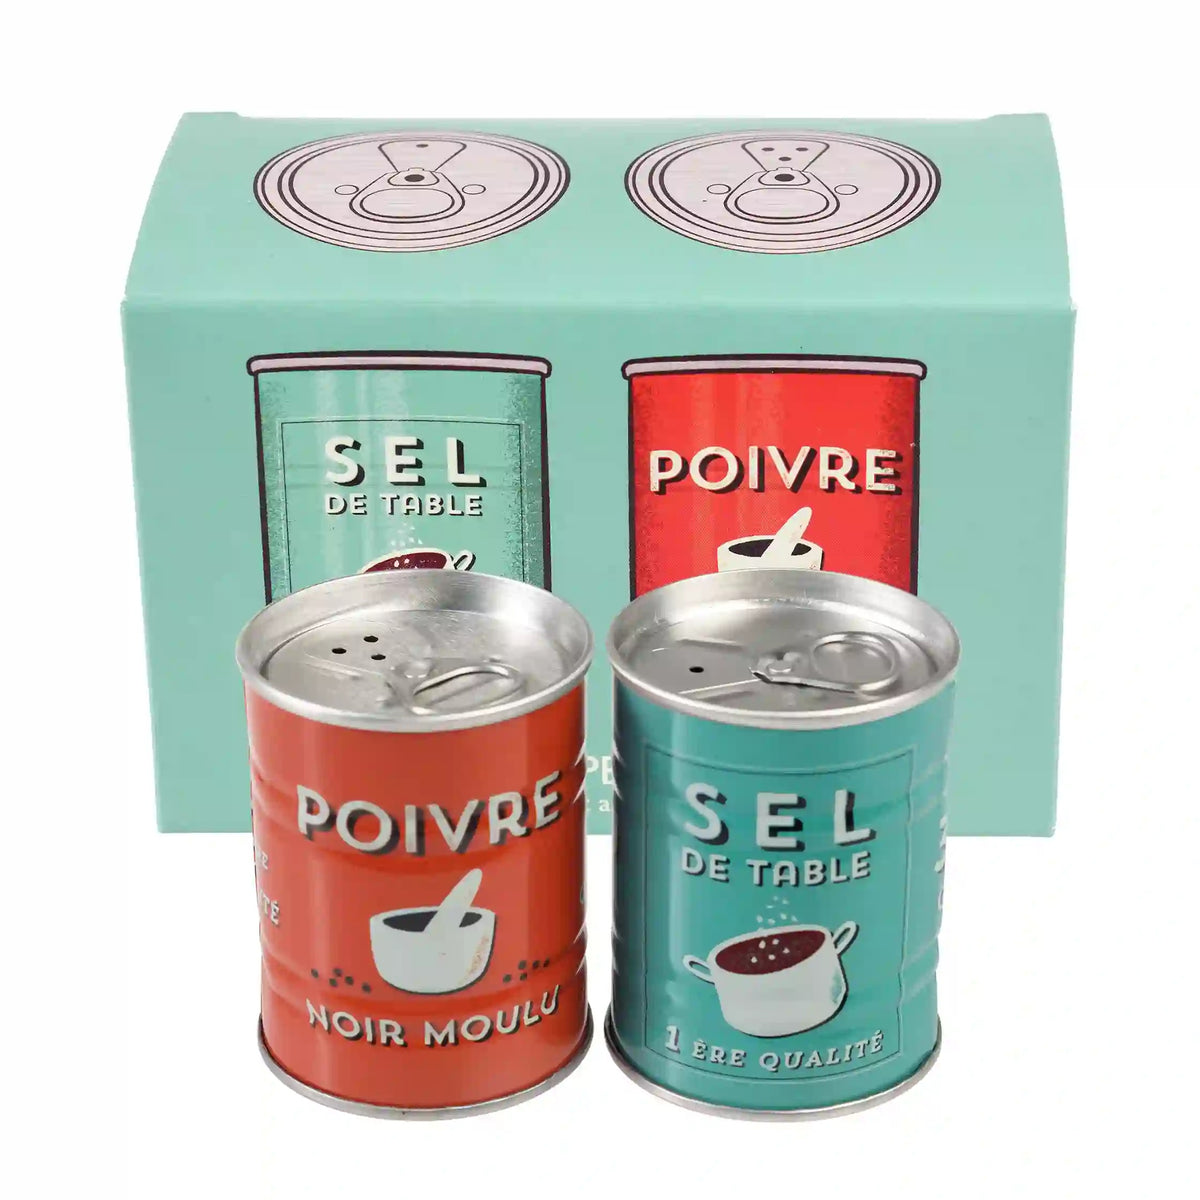 Sel and Poivrew Salt and Pepper Tins